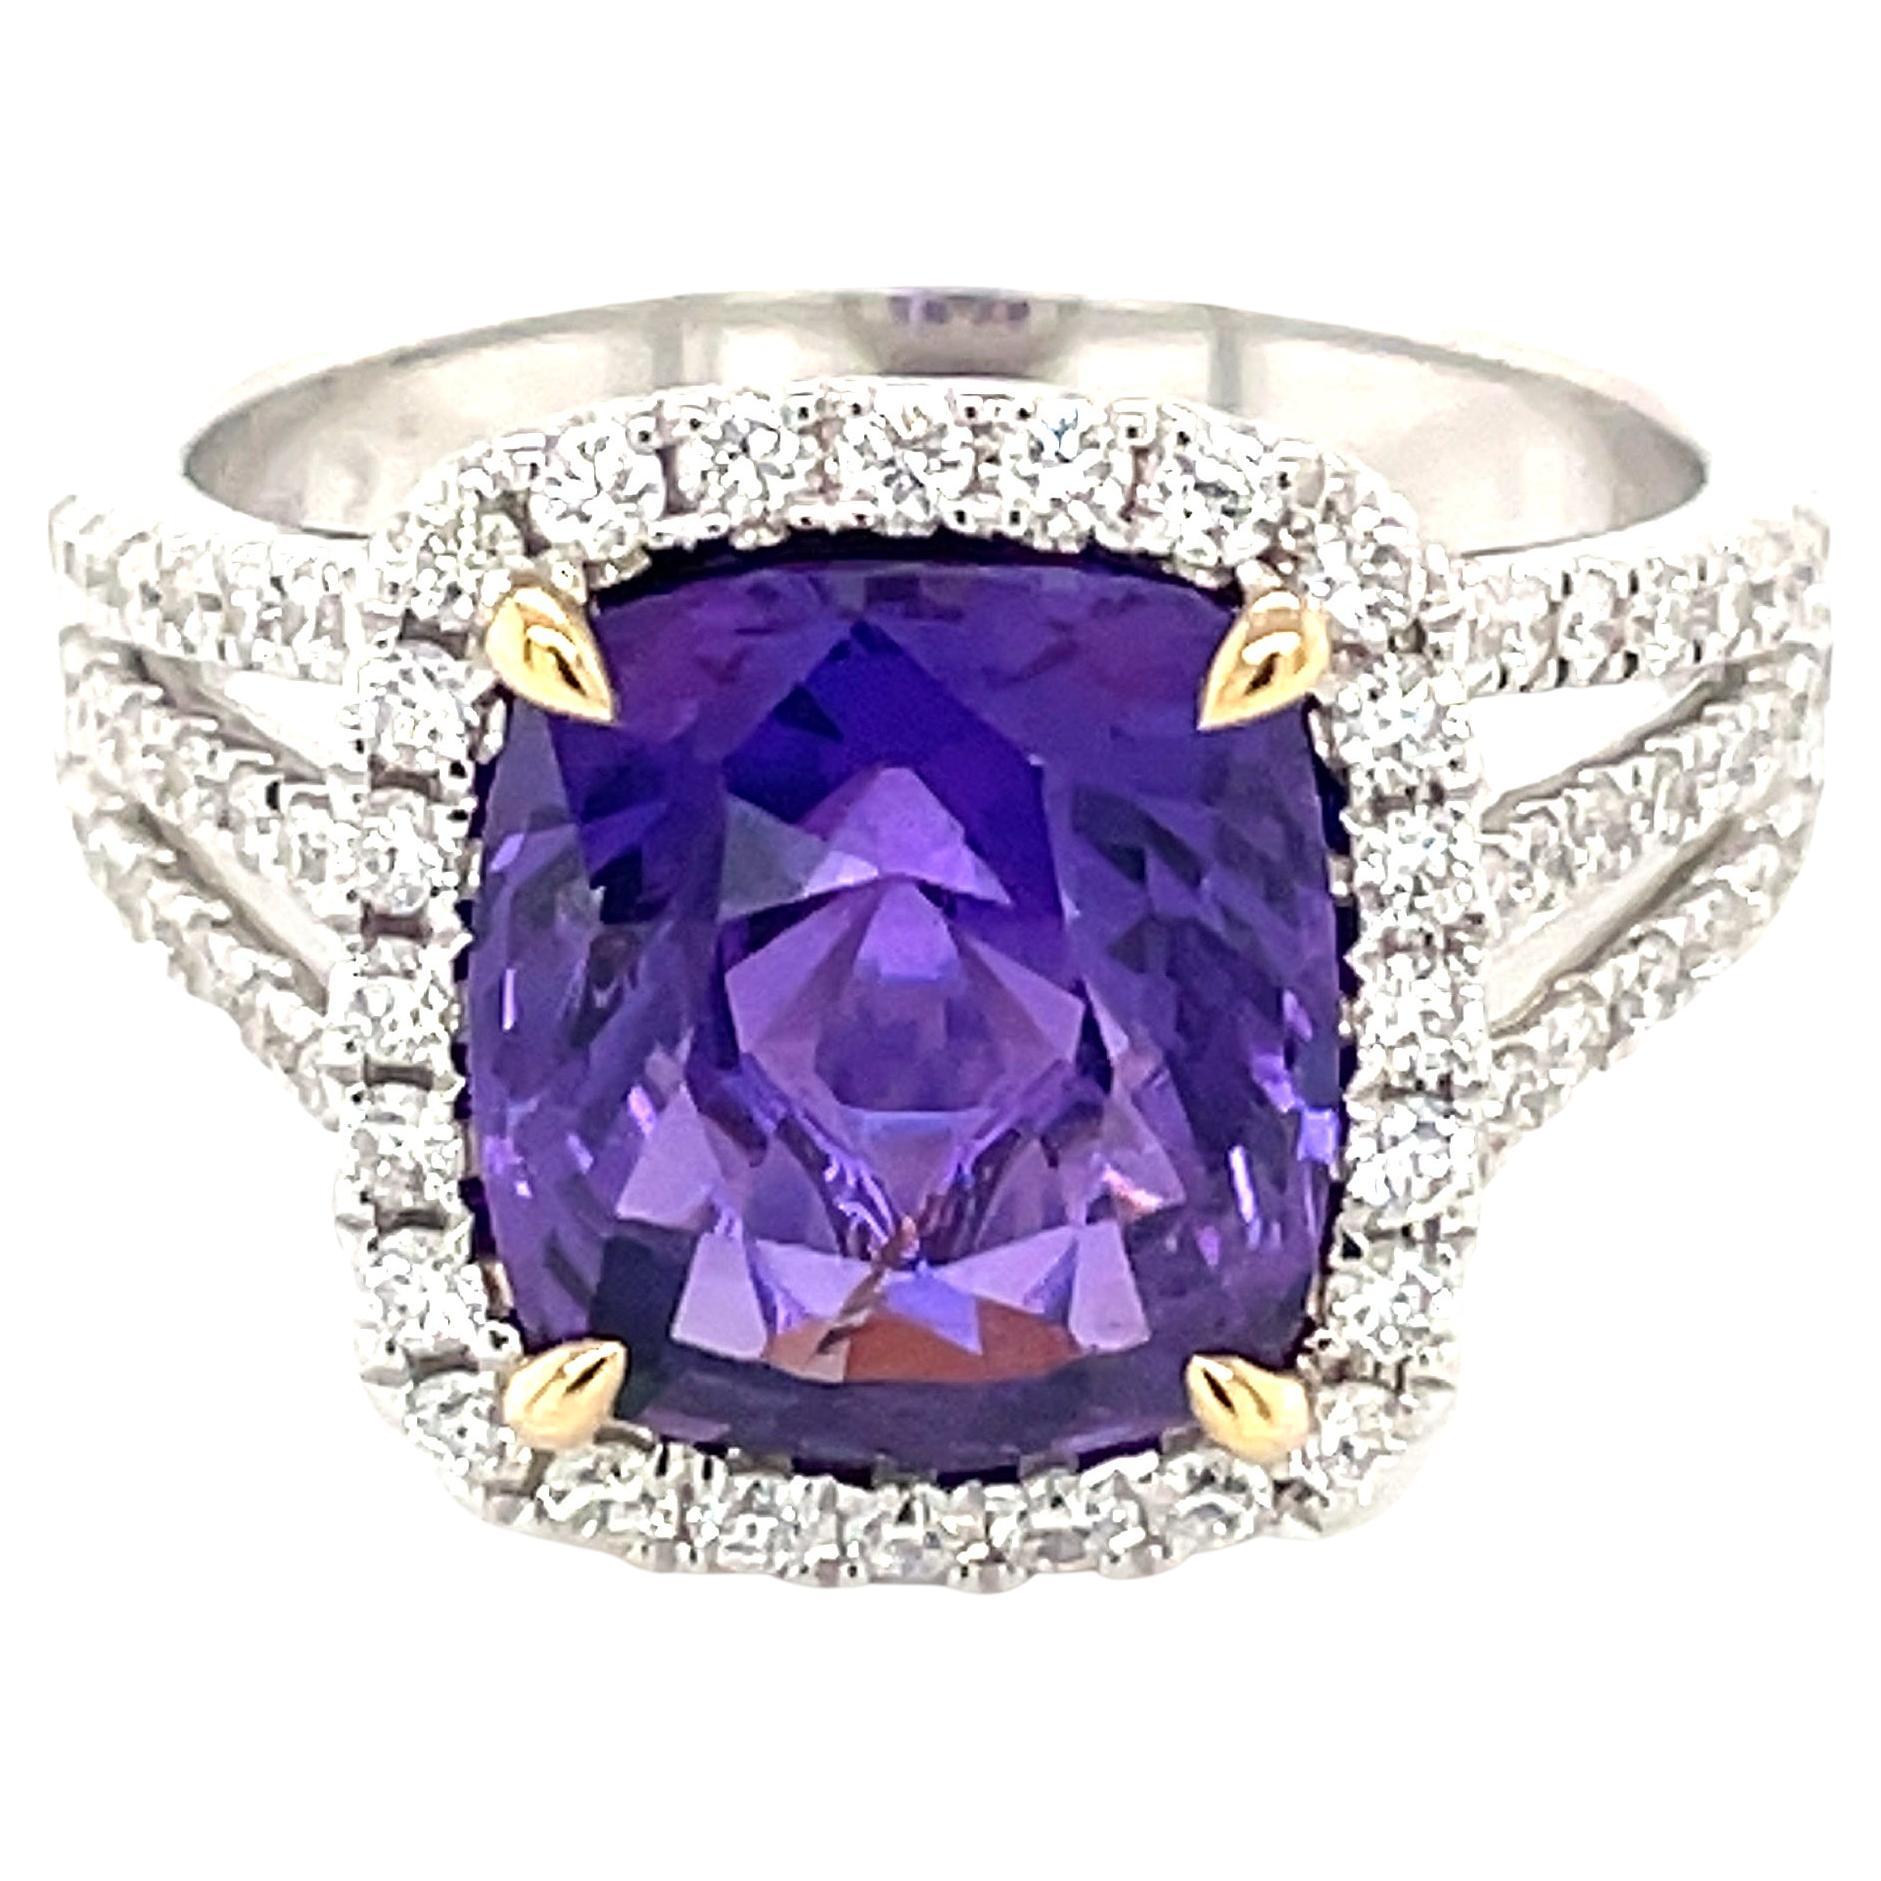 GAL Certified Natural No Heat 4.59 Carat Purple Sapphire and Diamond Ring